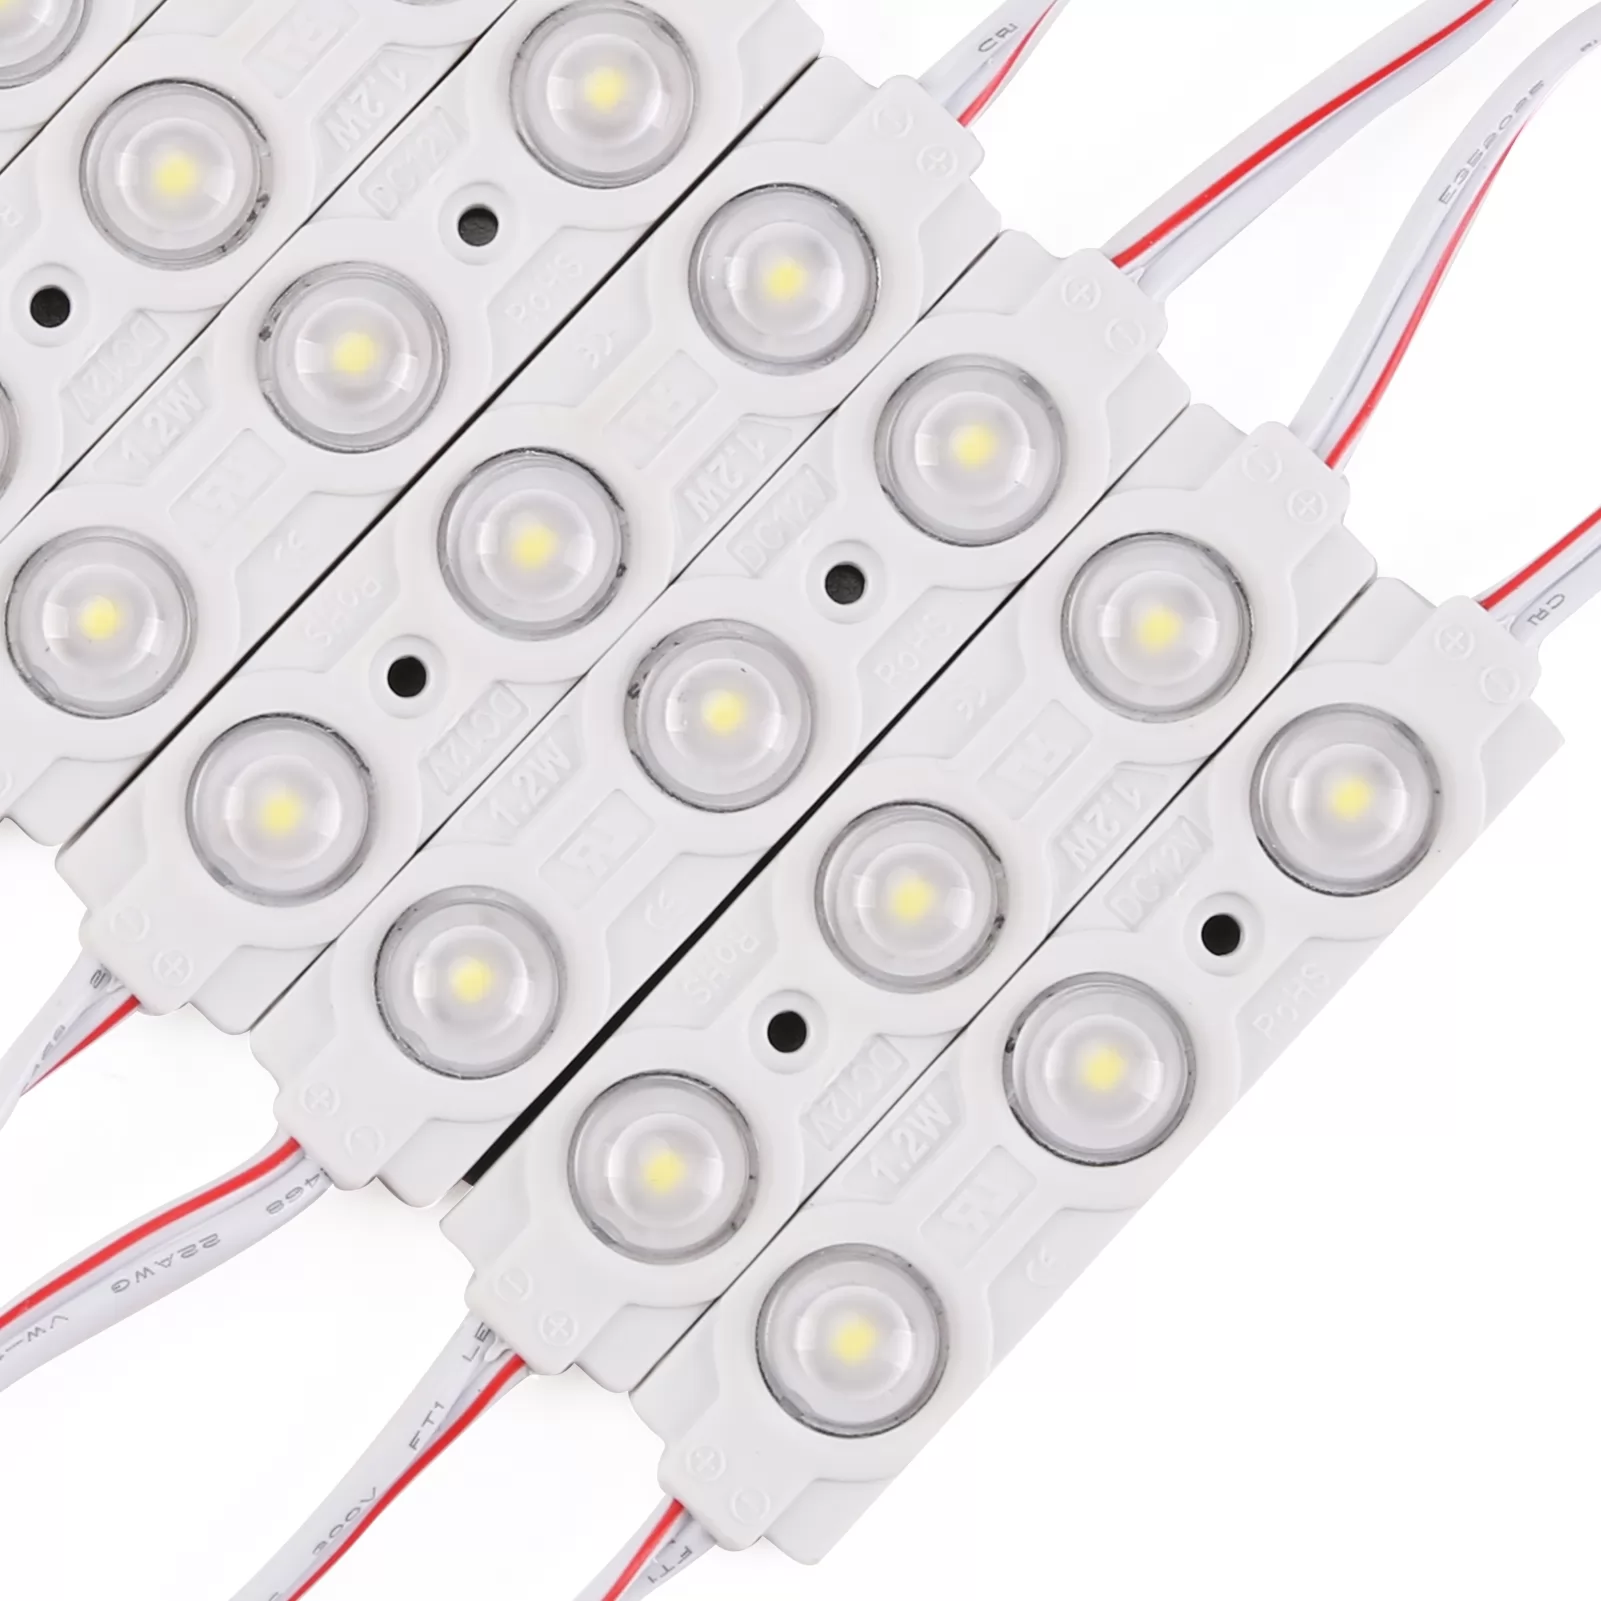 LED Module 12V DC UL Listed 3 LEDs 6500K Daylight White 1.2W for Advertising Signs Letter (200PCS)